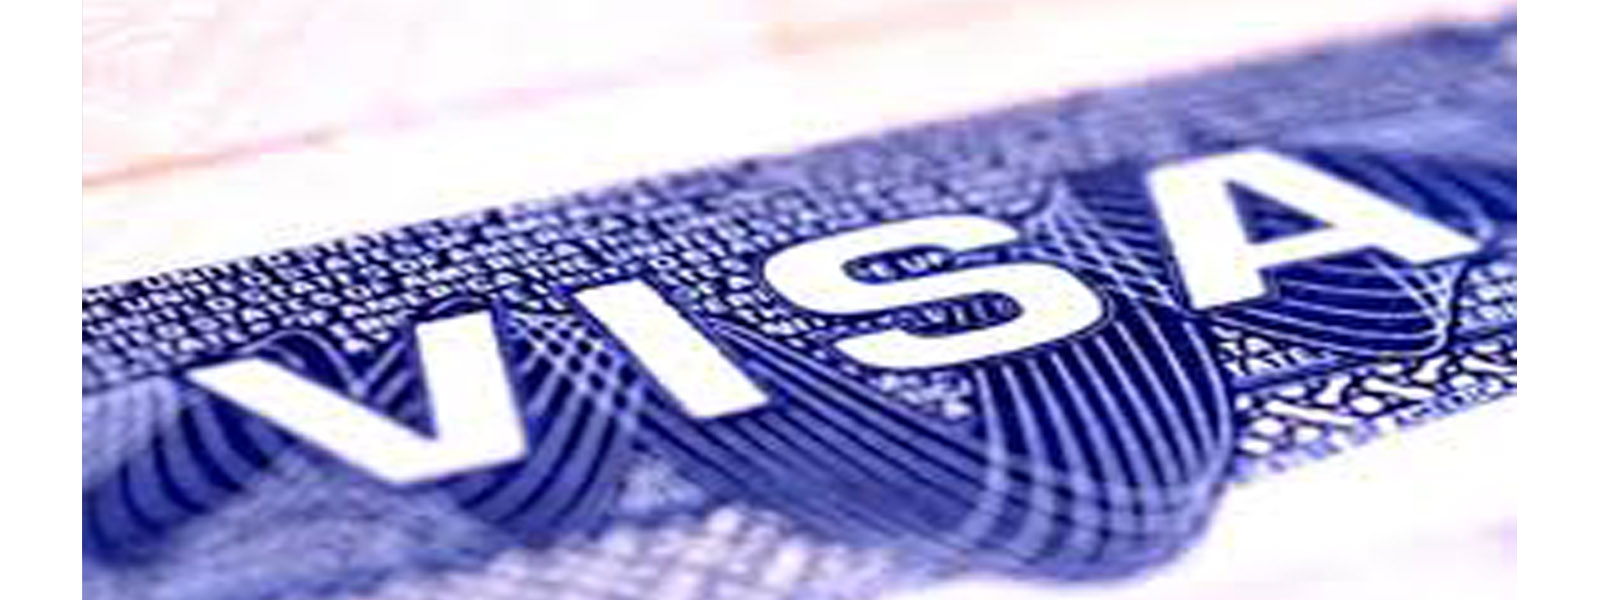 Corona Visu : Government cancels on arrival visa